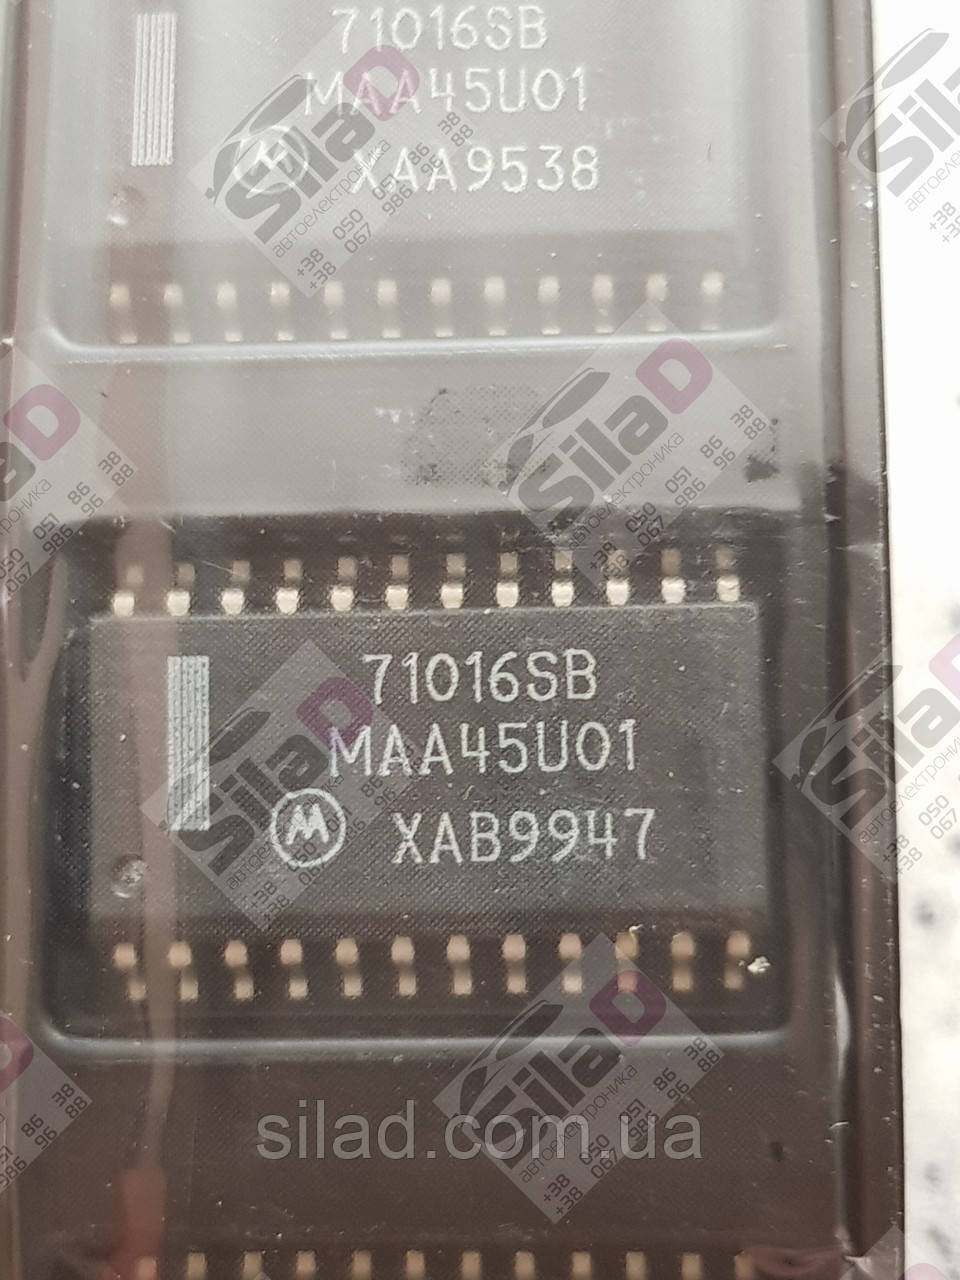 Мікросхема 71016SB MAA45U01 Motorola  корпус SOP24